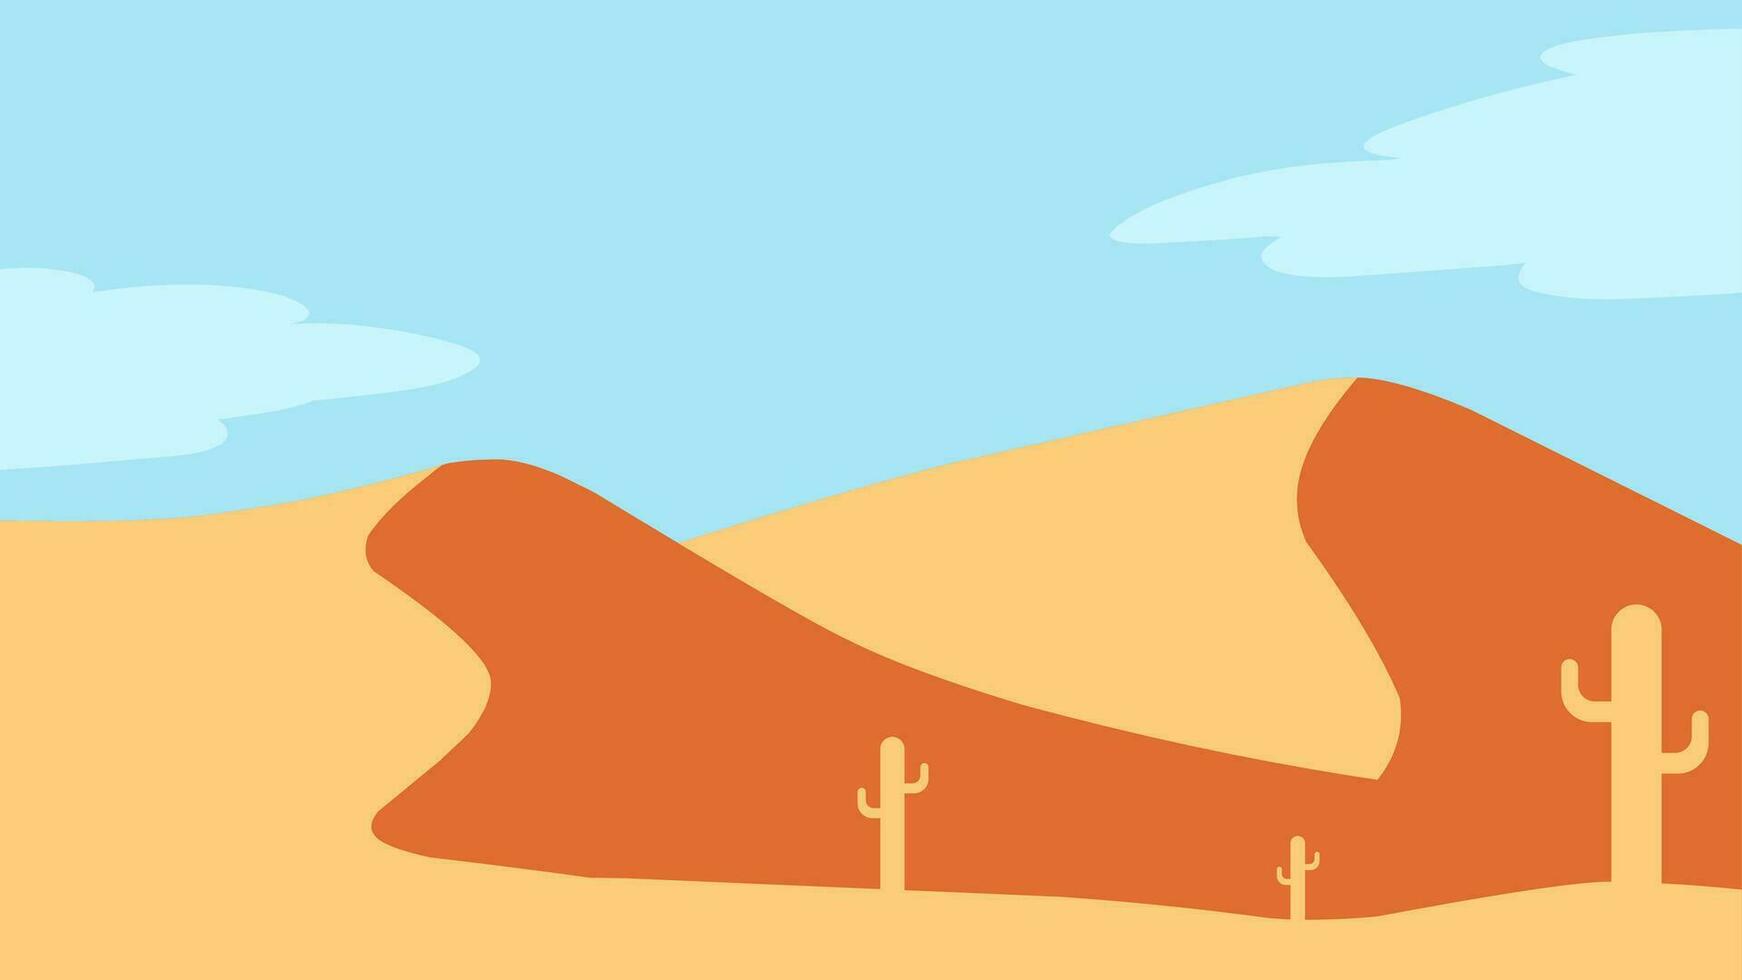 Desert landscape vector illustration. Scenery of sand desert with heat sun and cactus. Dry desert landscape for illustration, background or wallpaper